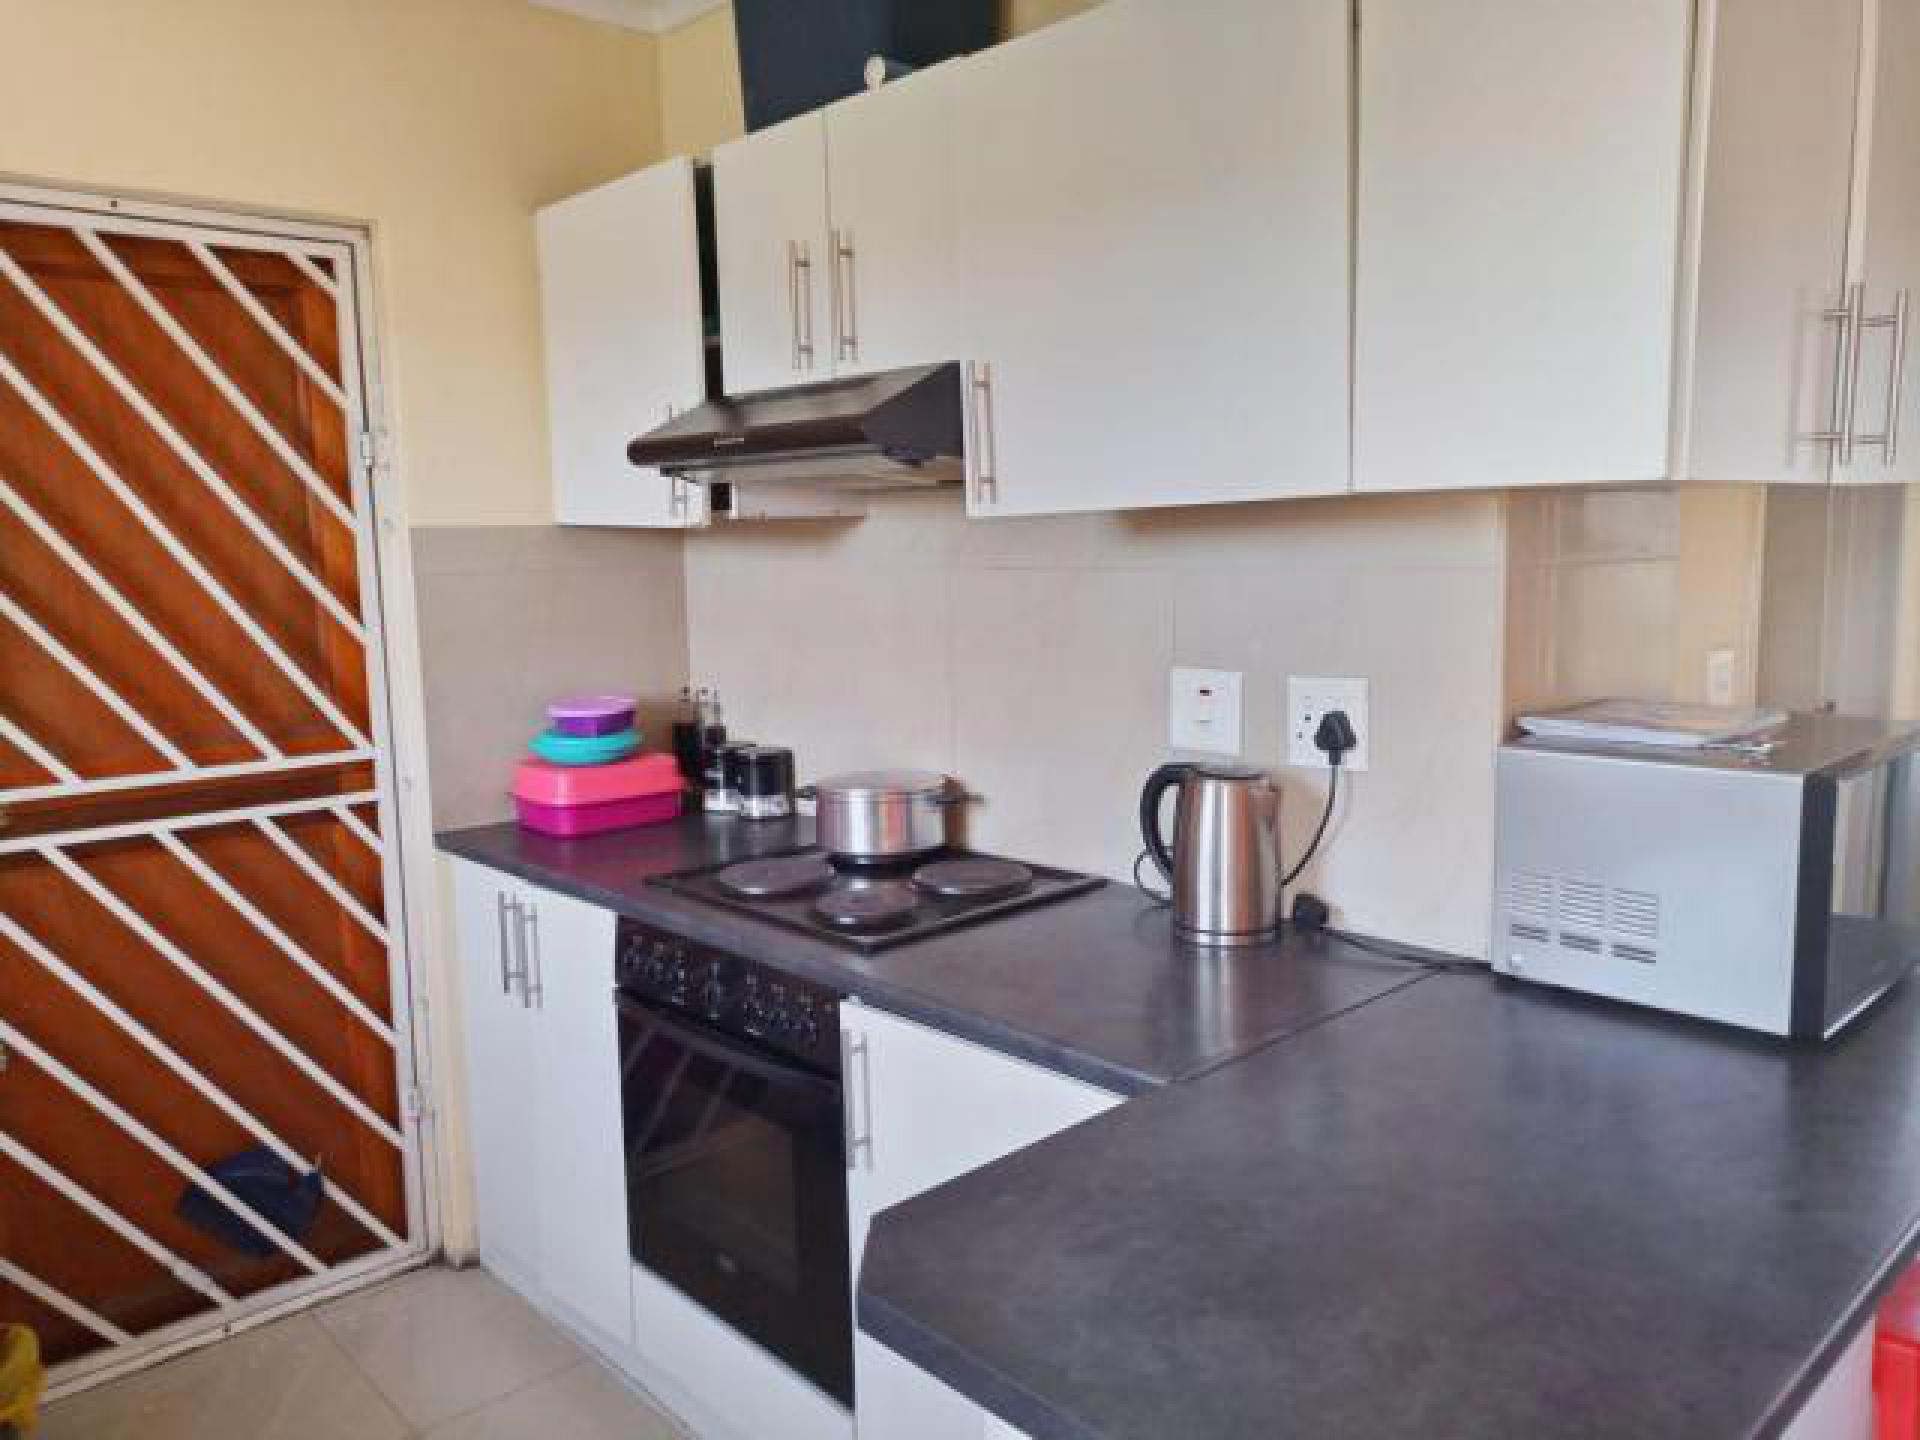 Kitchen of property in Kalkfontein